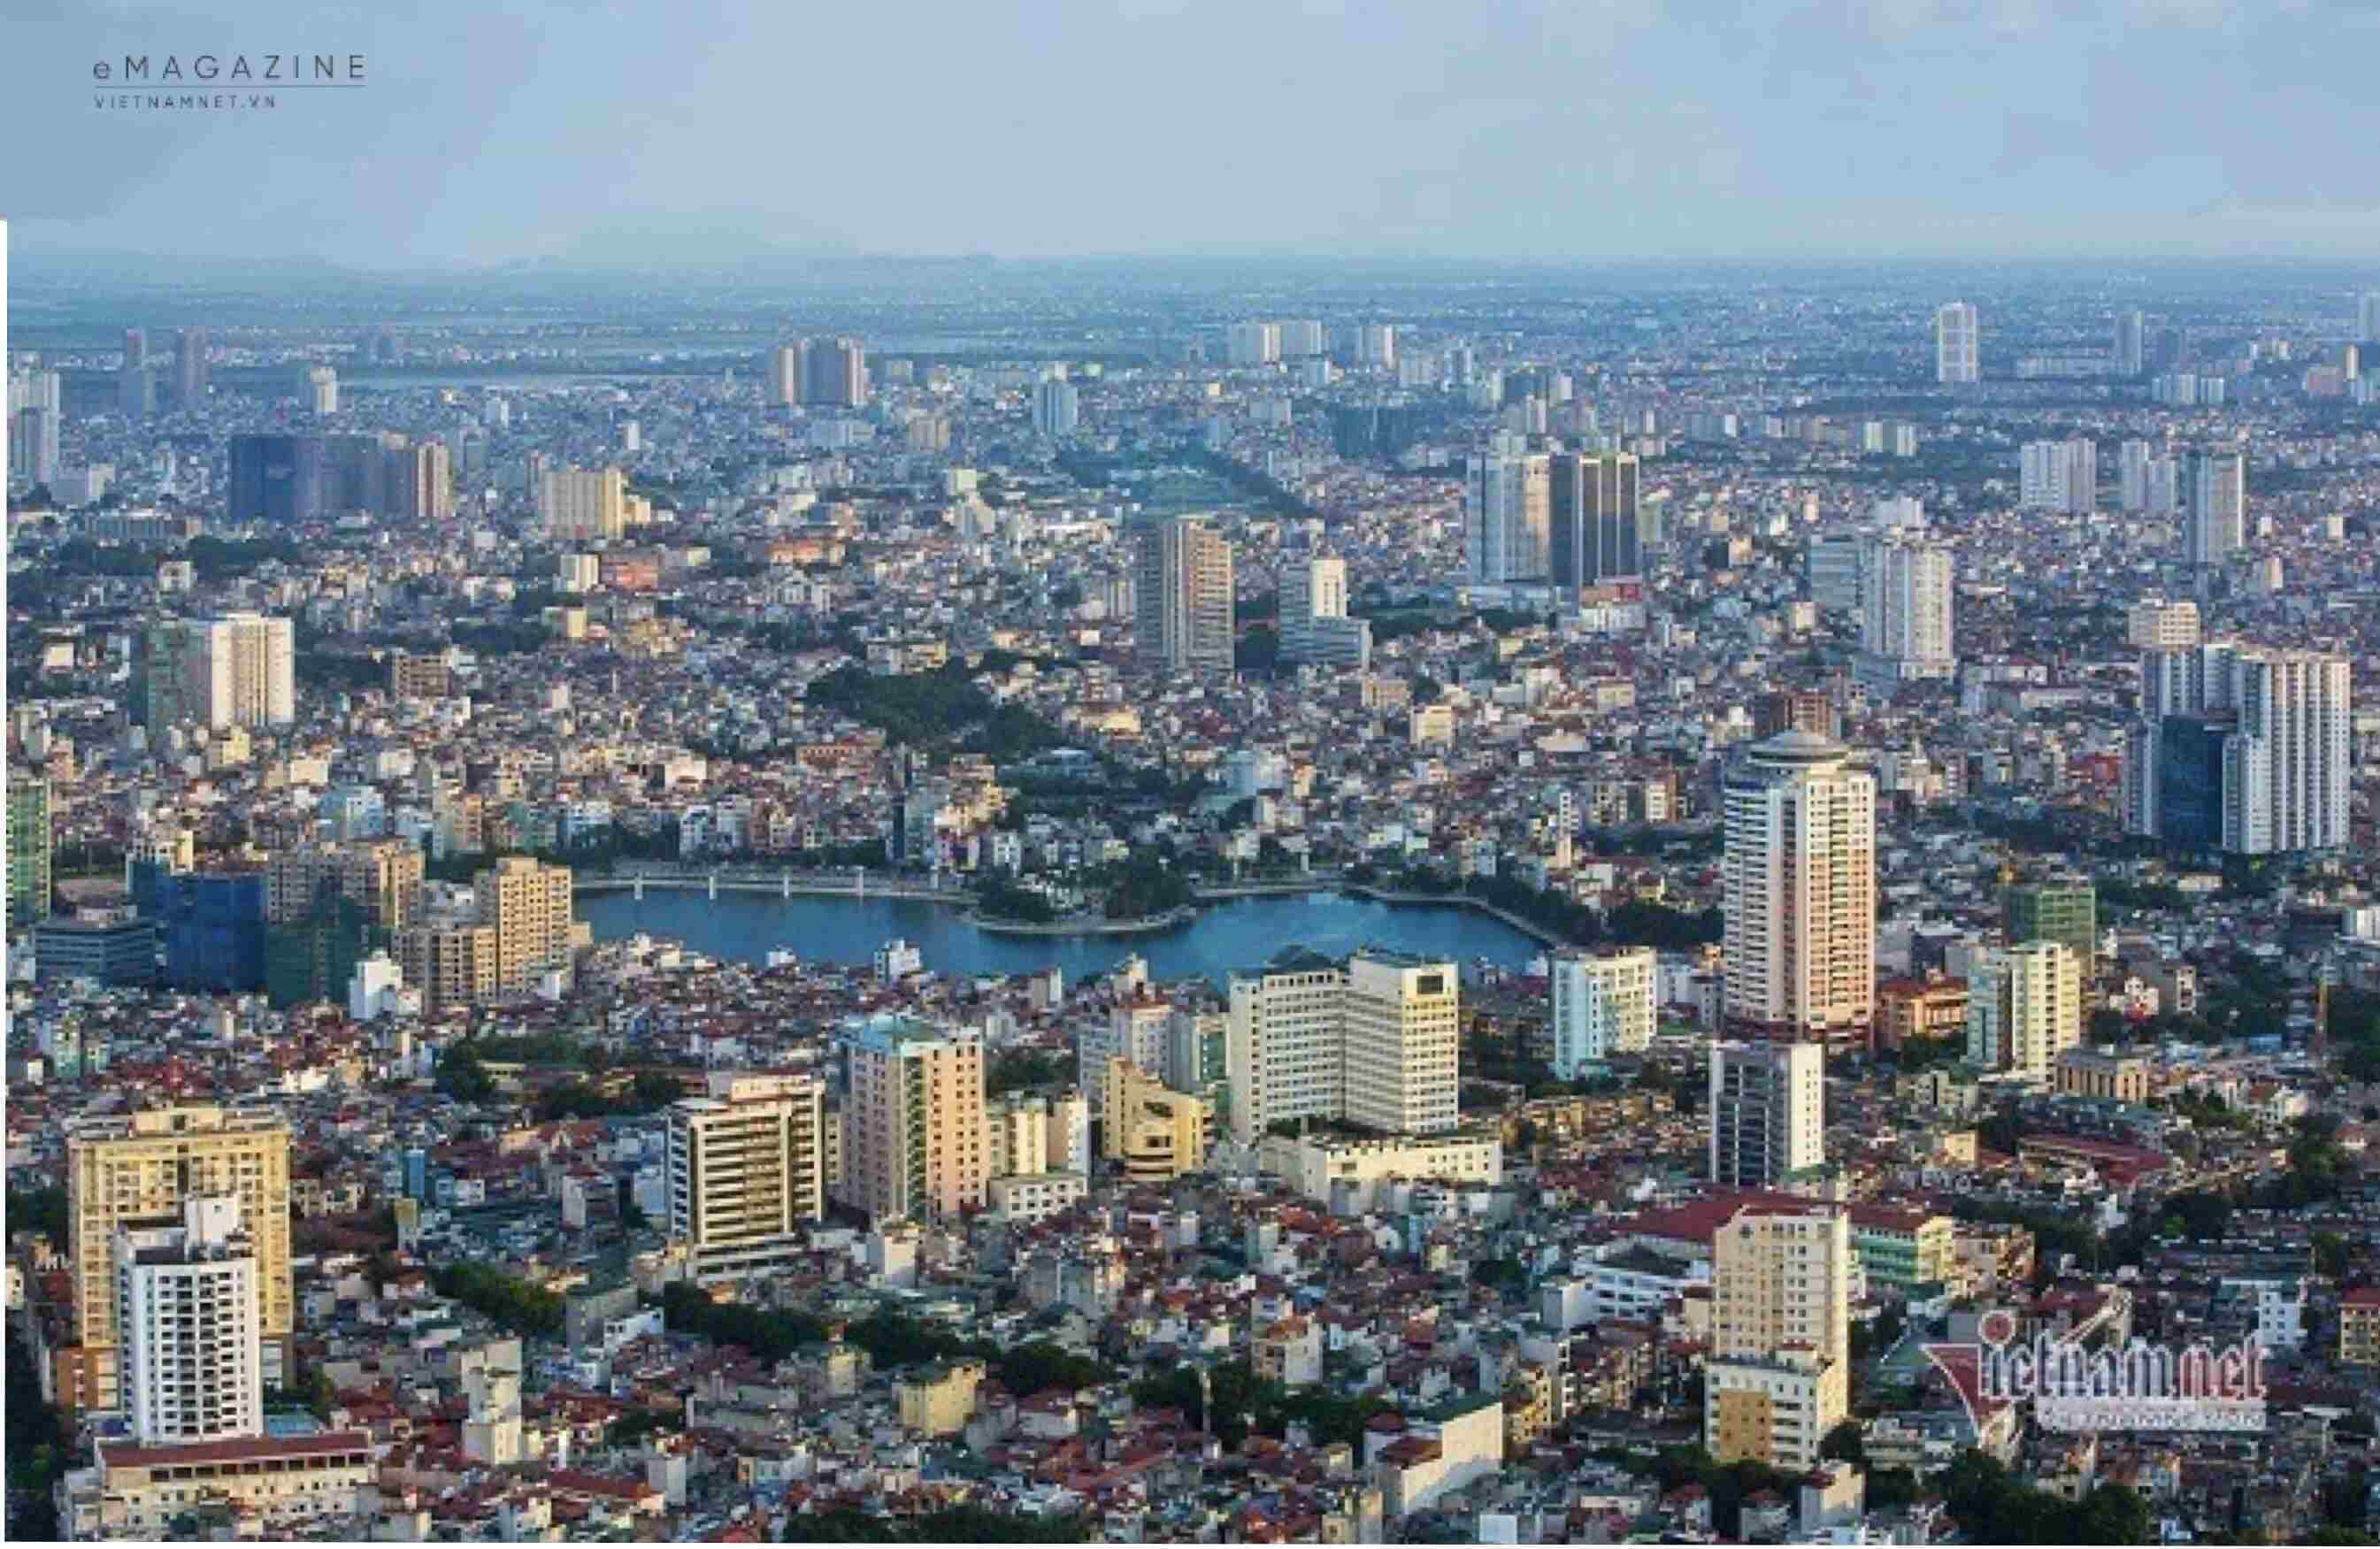 Outstanding events in Vietnam's real estate market in 2021